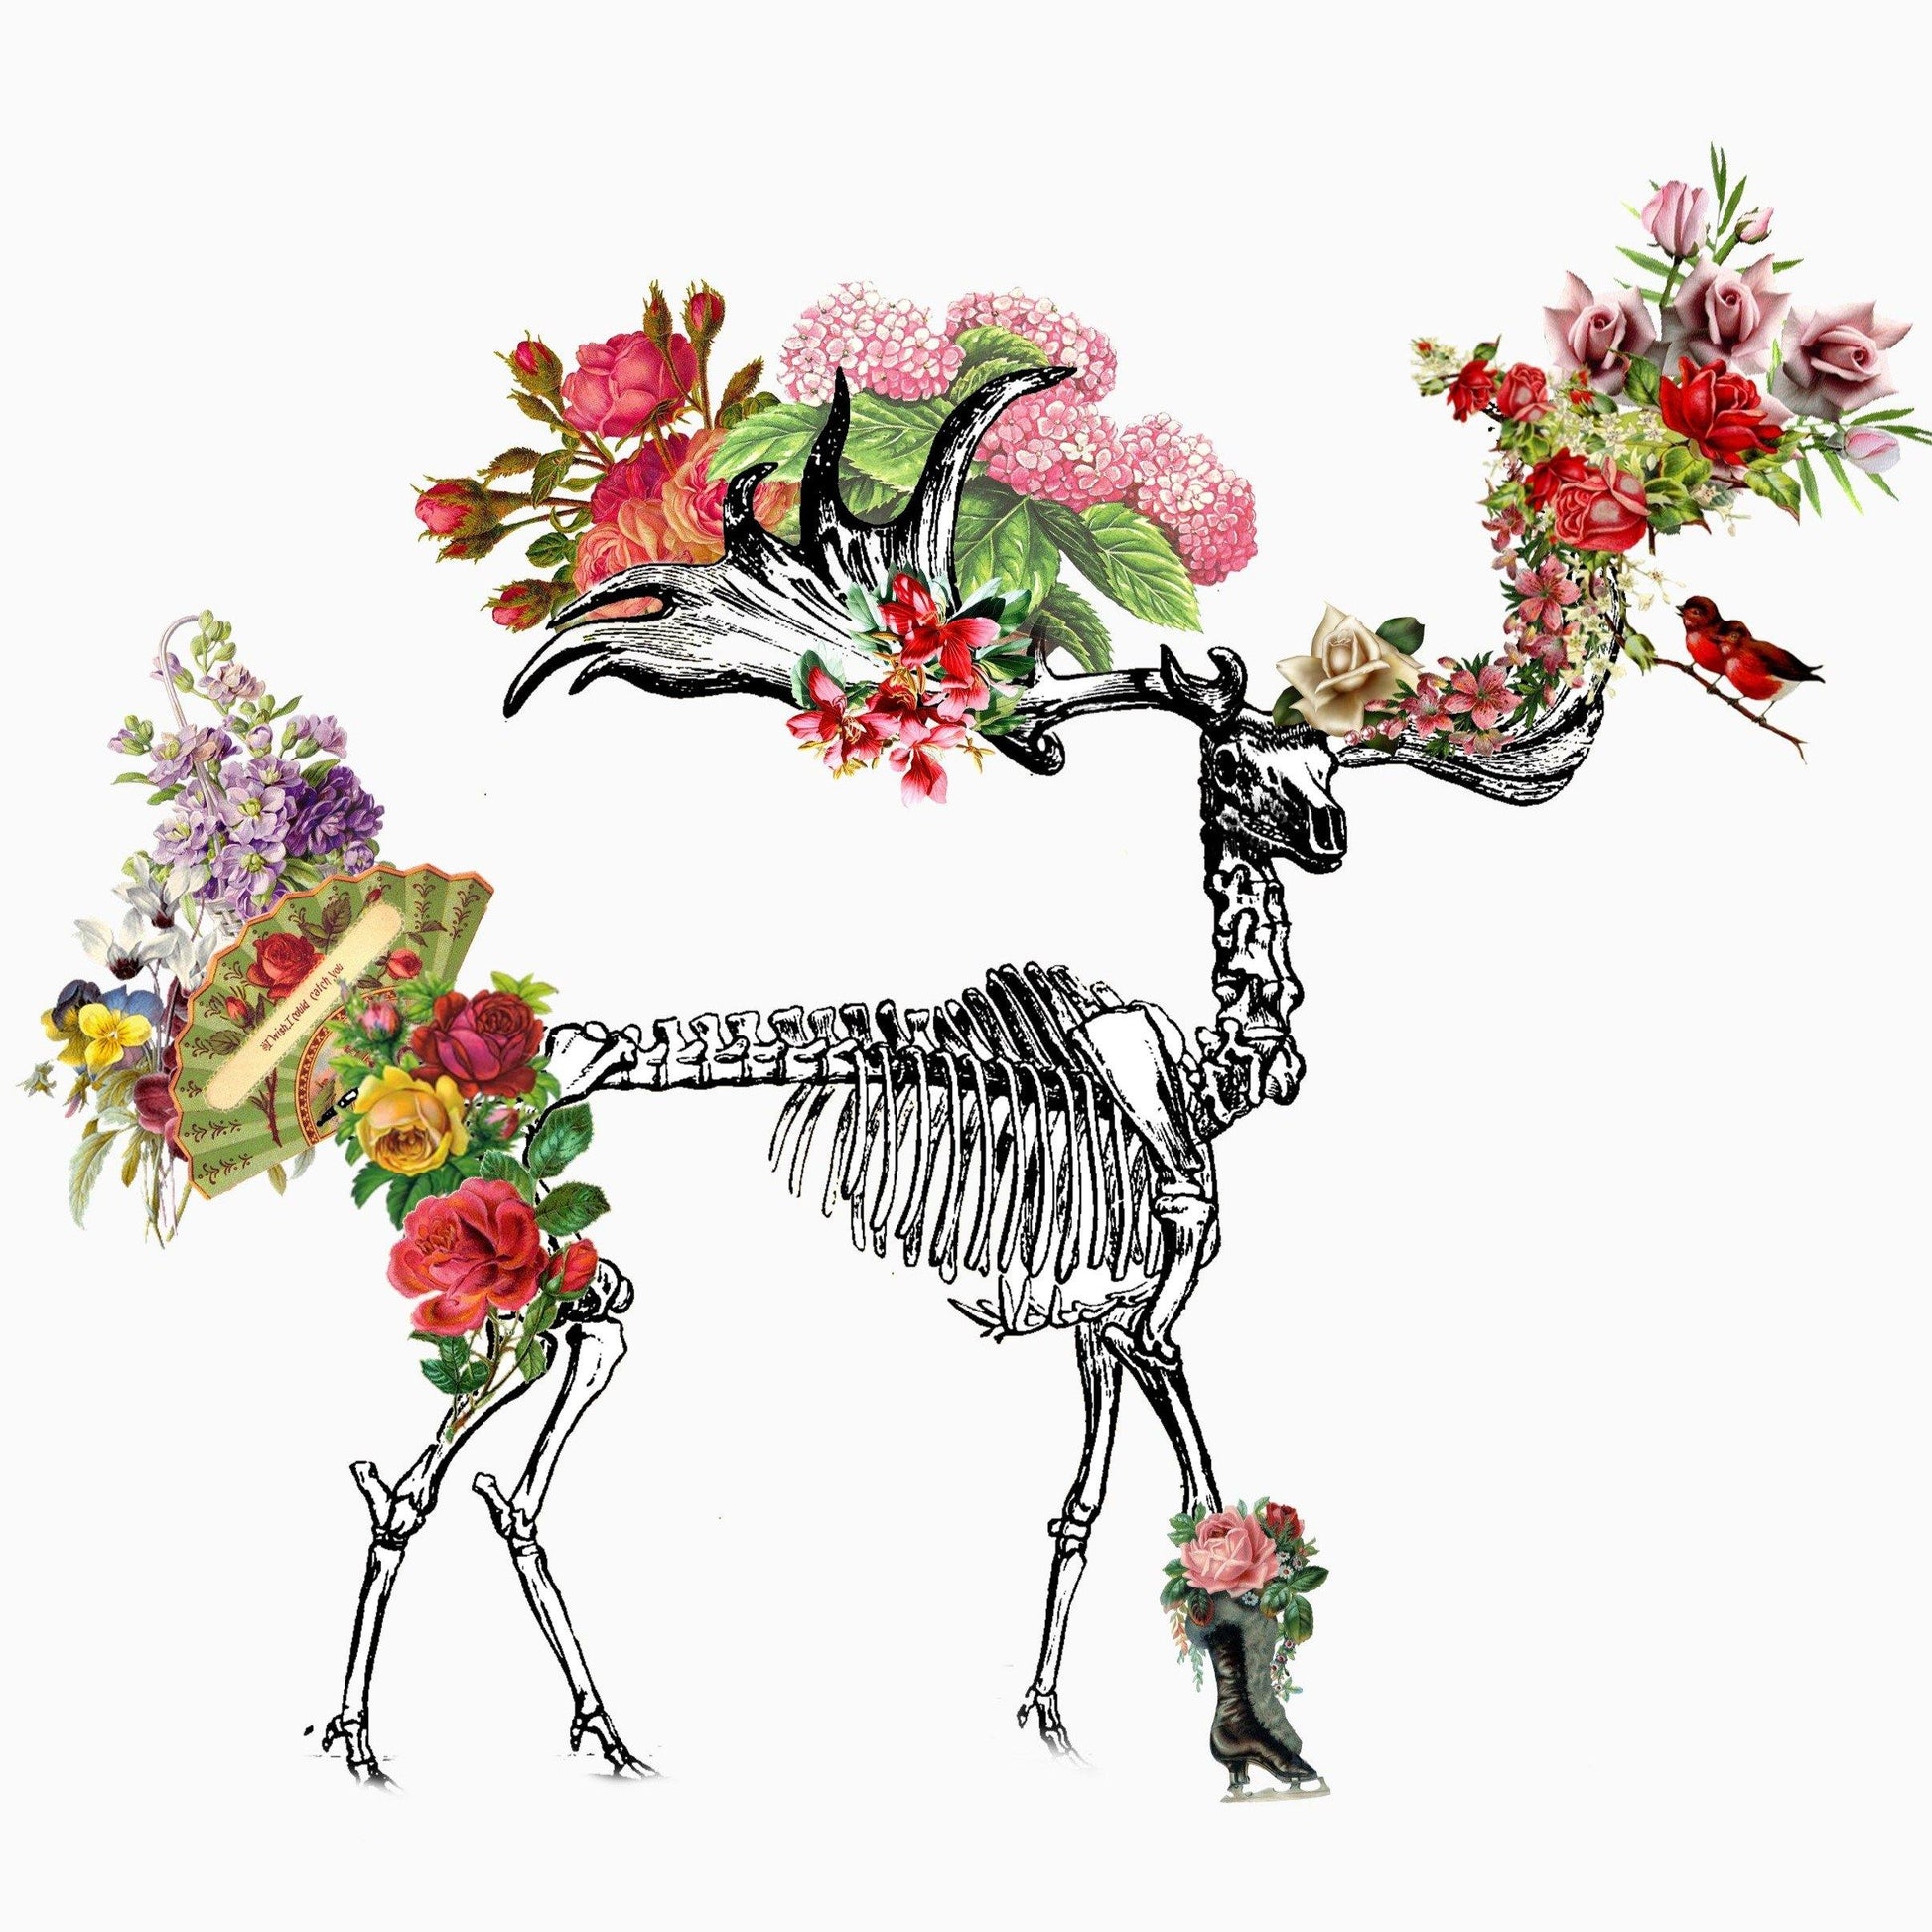 Deer Skeleton Anatomical Flowers | Anatomical Body Print | Flower Art Print | Illustration Poster - 98types